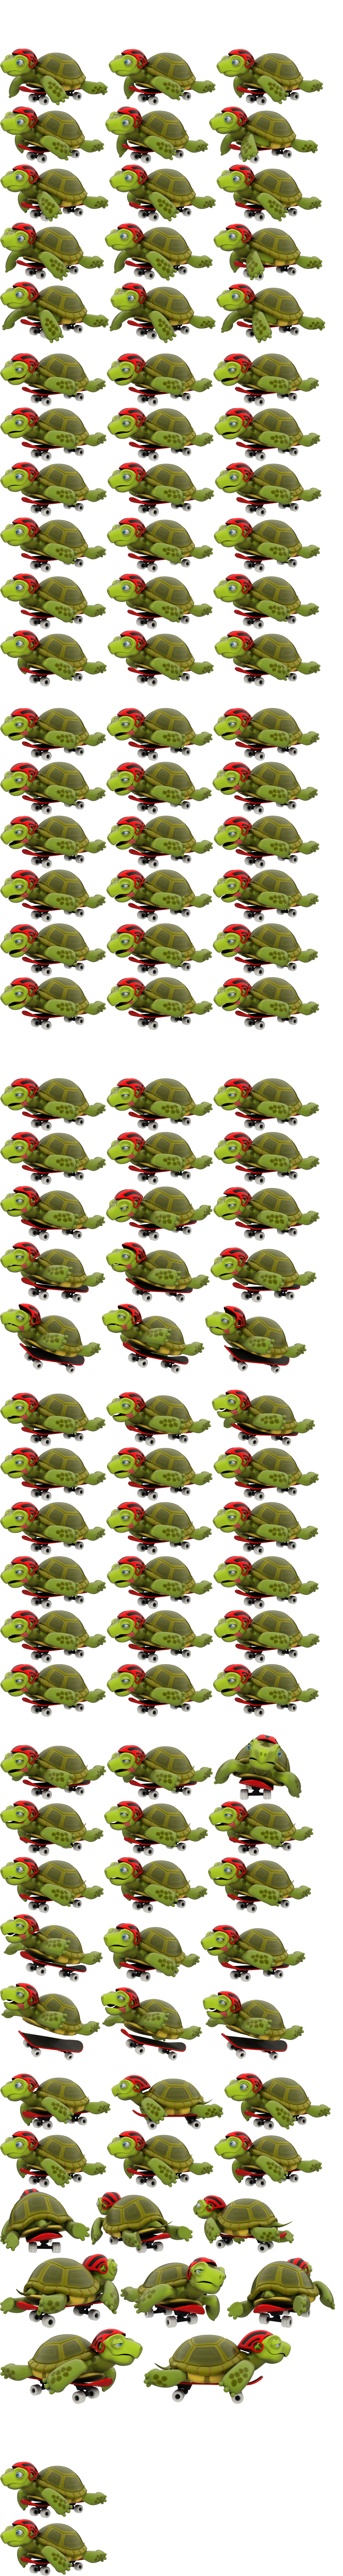 Skater Turtle